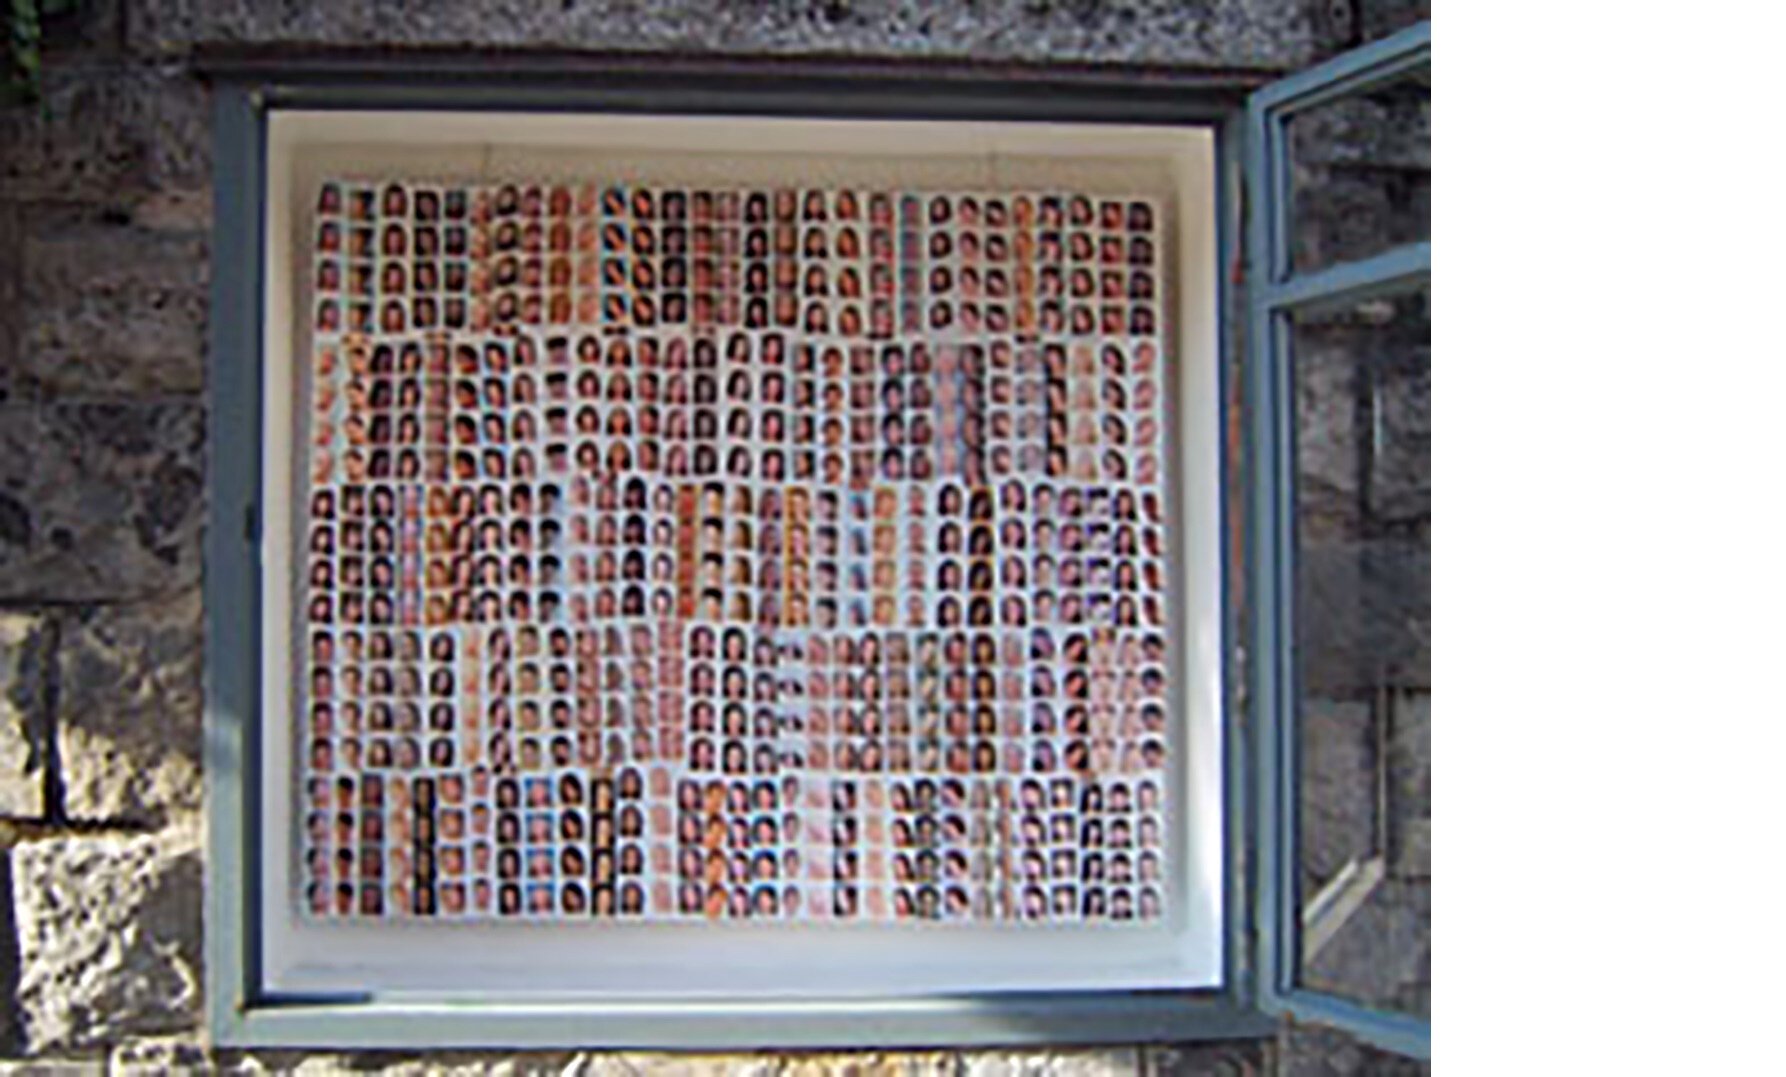   Photomaton (2005) Loïc Martin   Inkjet print on photo paper, mdf, glue. Variable size installation (48,8 x 49,6 x 0,4 inches / 124 x 126 x 1 cm) 